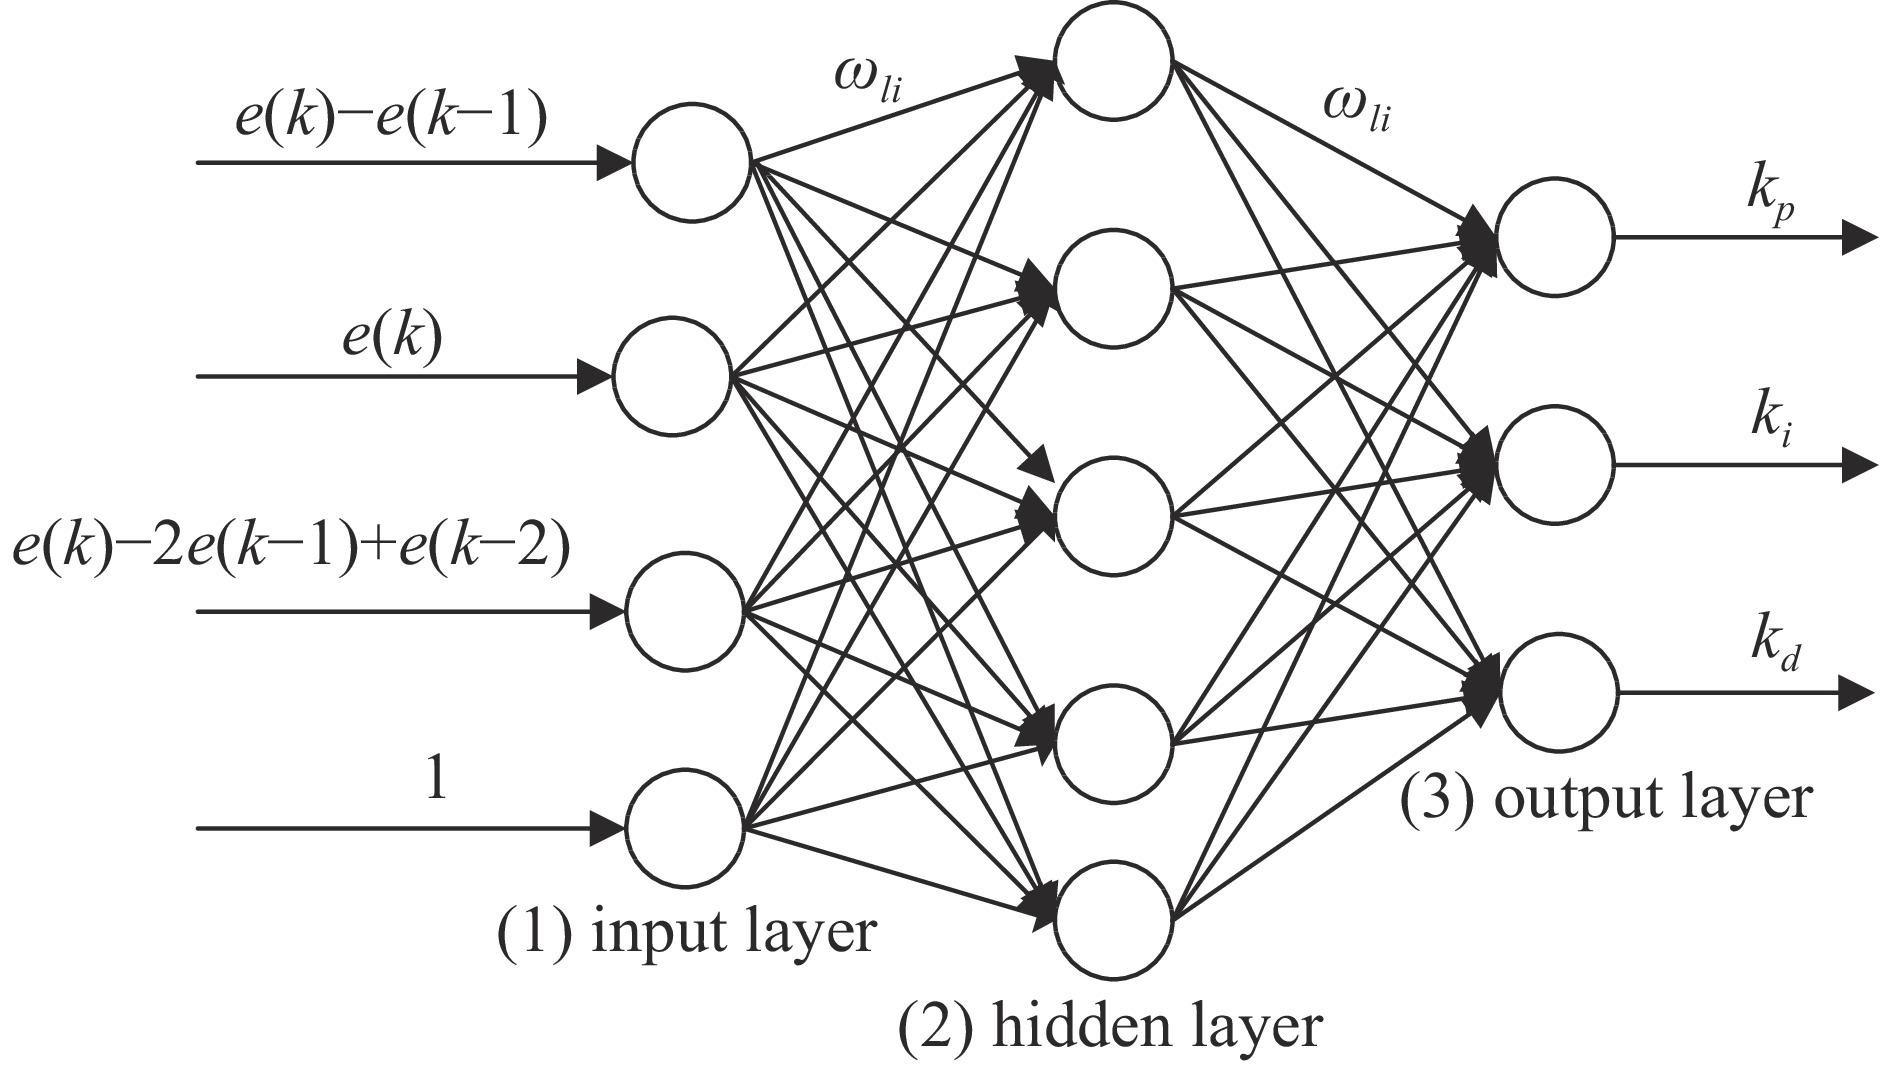 BP neural network structure diagram